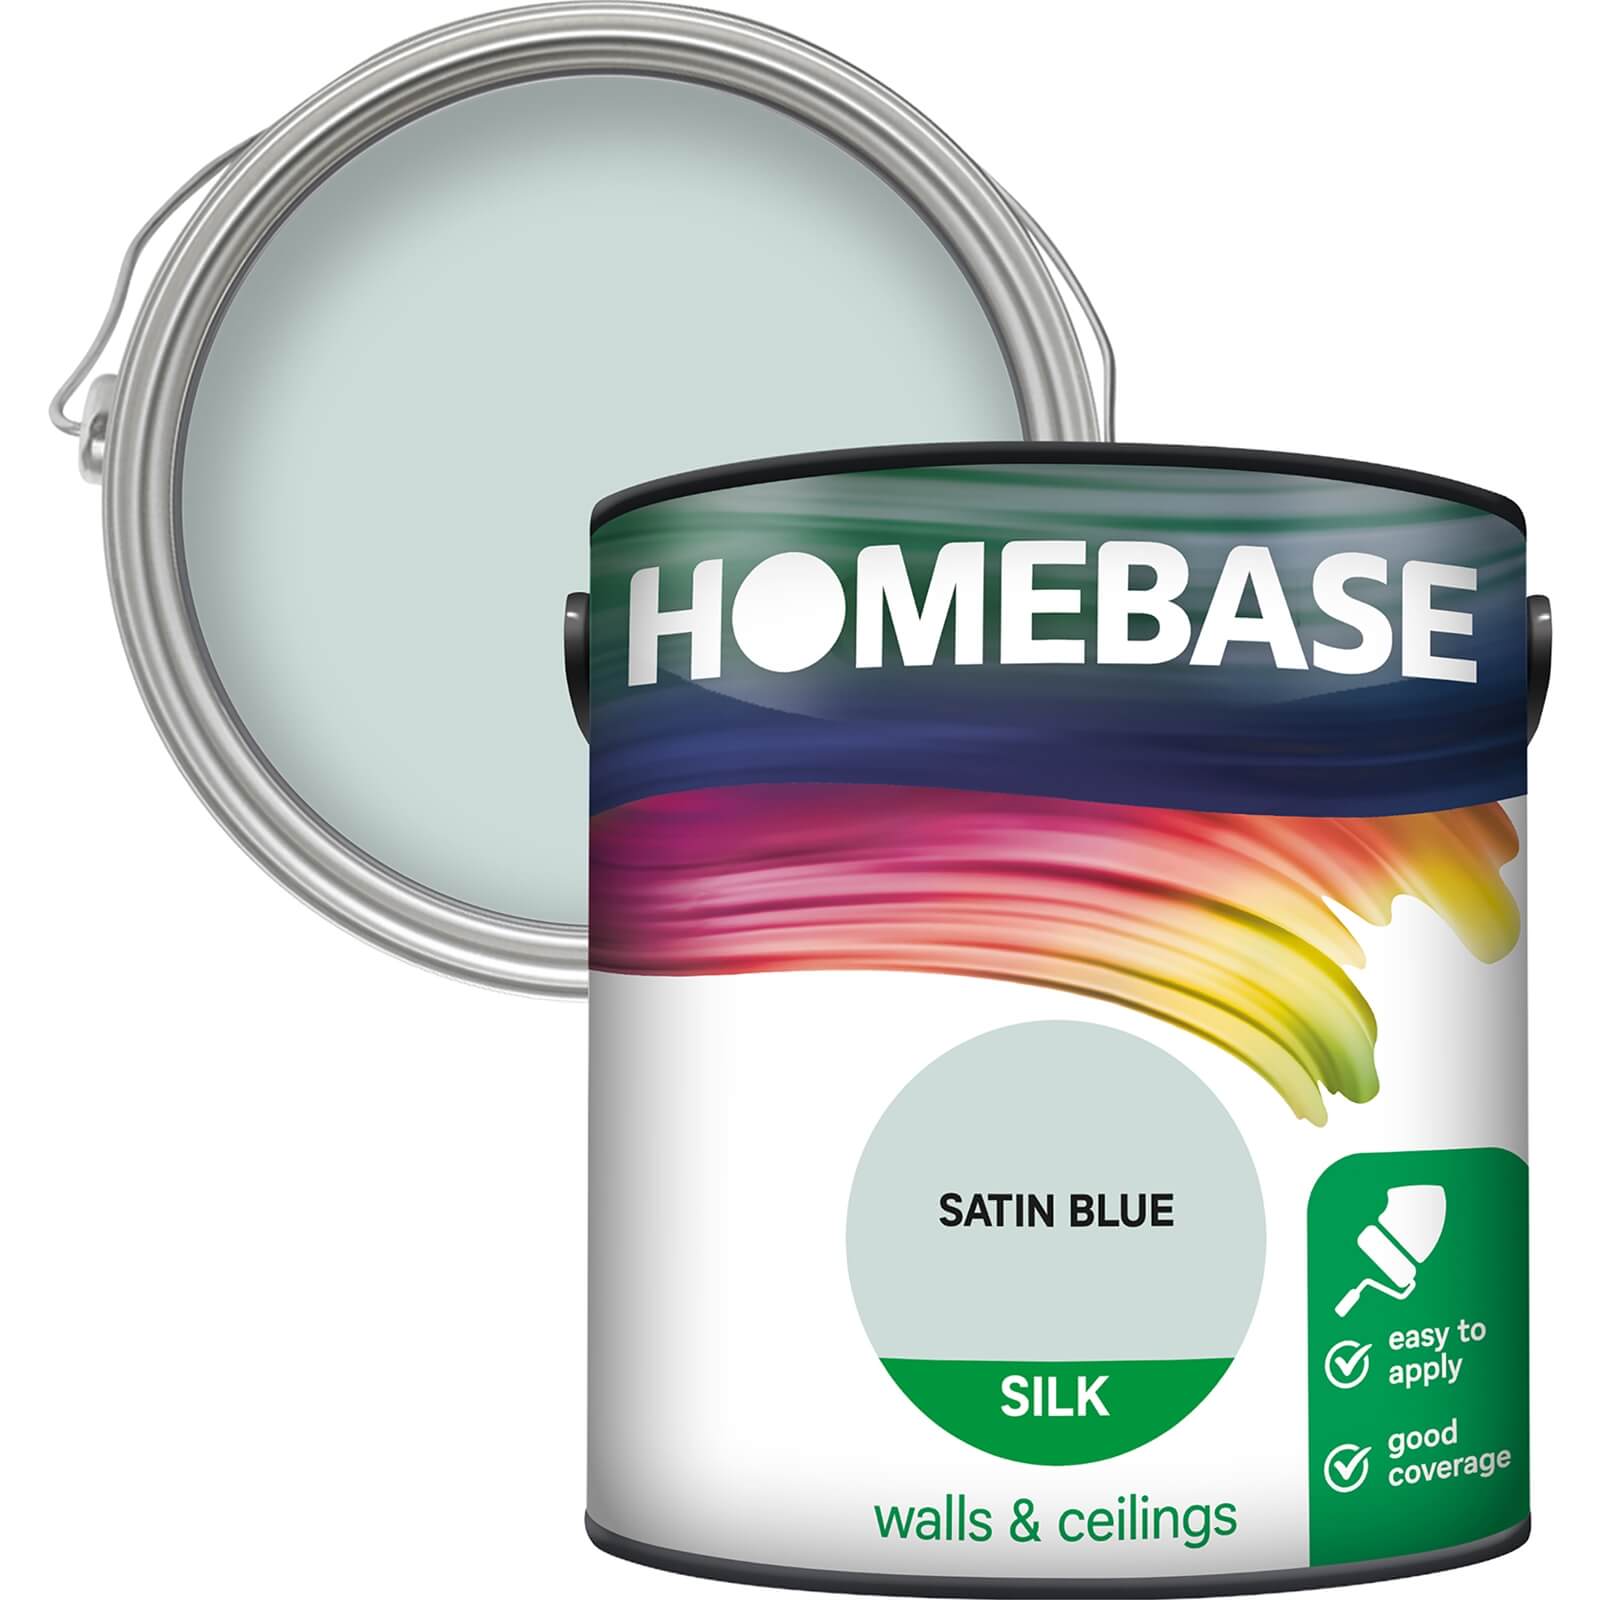 Homebase Silk Emulsion Paint Satin Blue - 2.5L